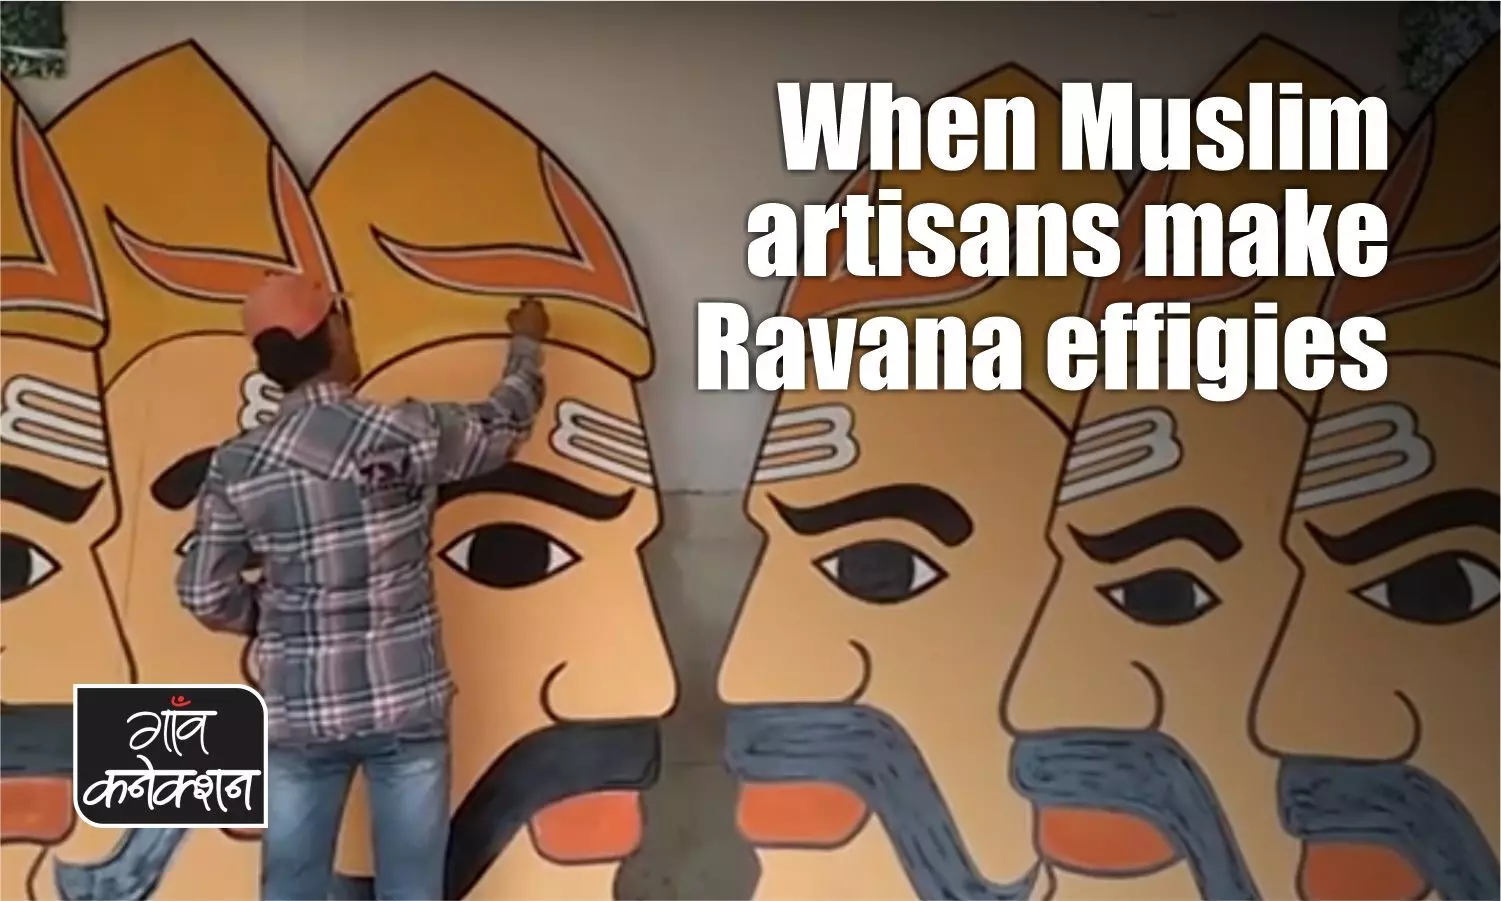 This Muslim family has been making Ravana effigies since three generations